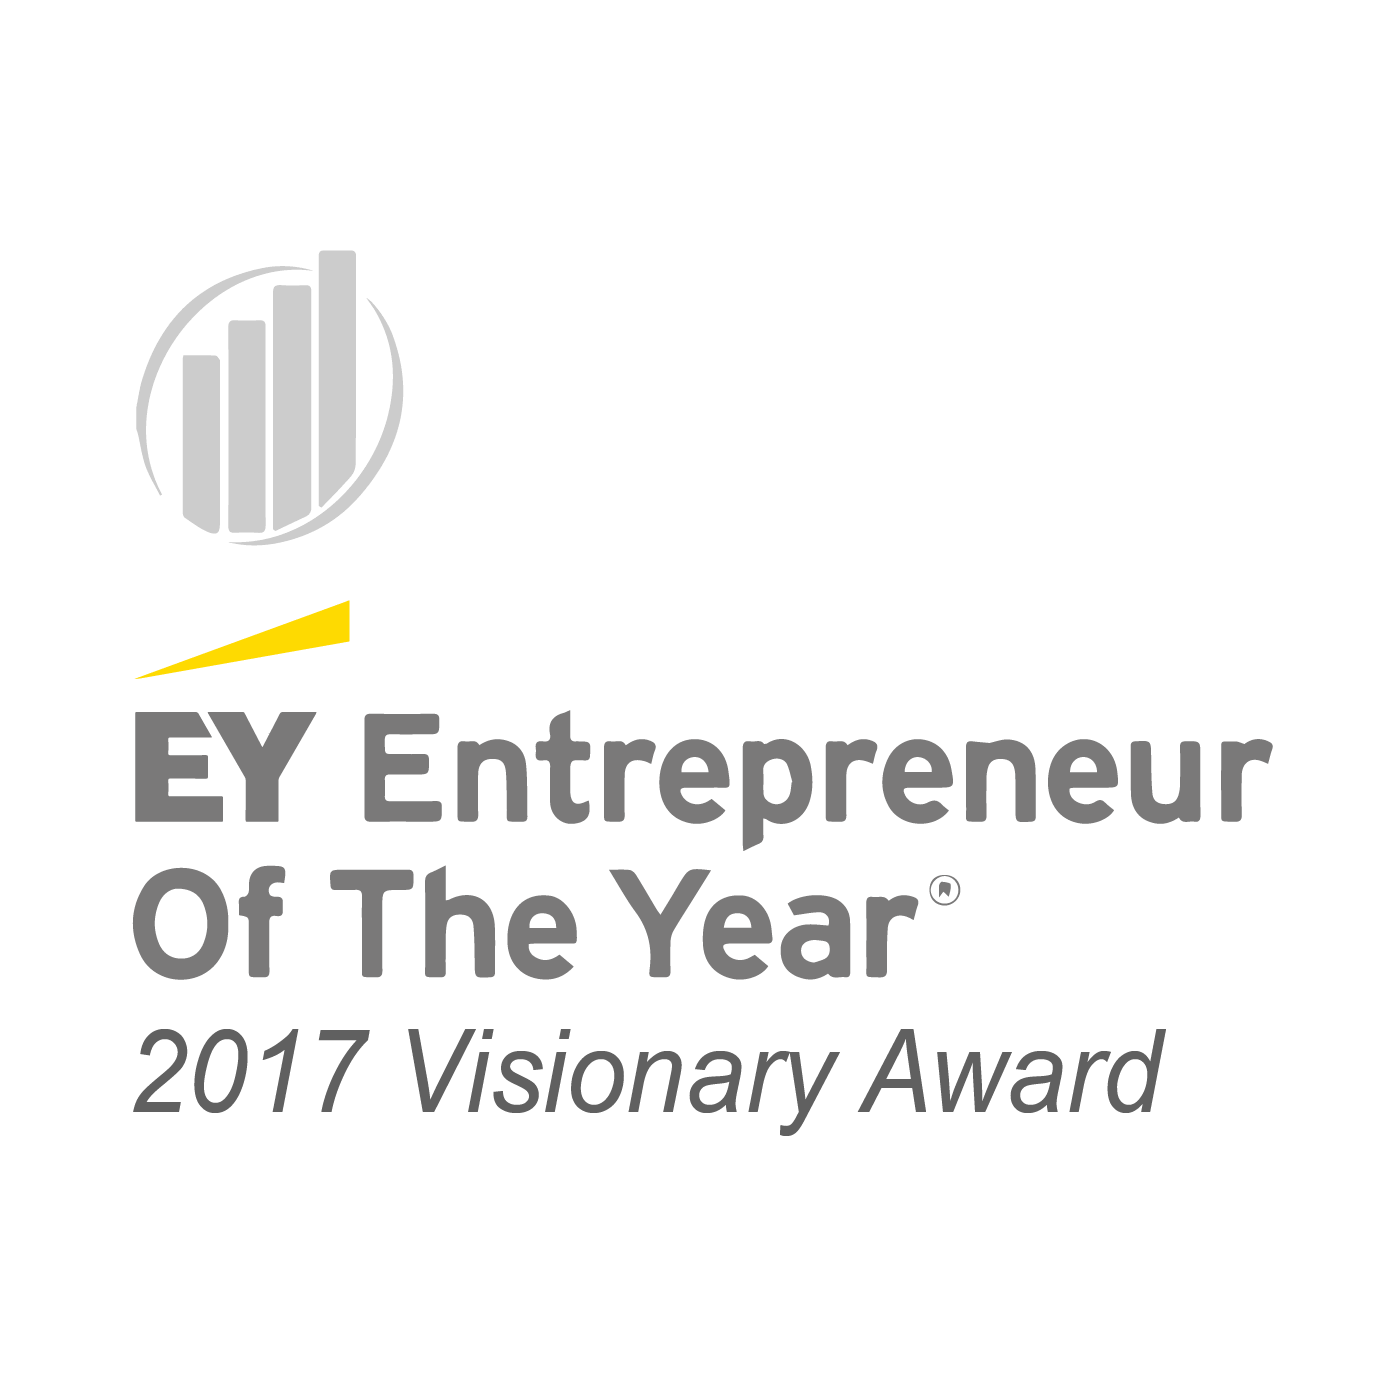 EY Entrepreneur of the Year 2017 Visionary Award